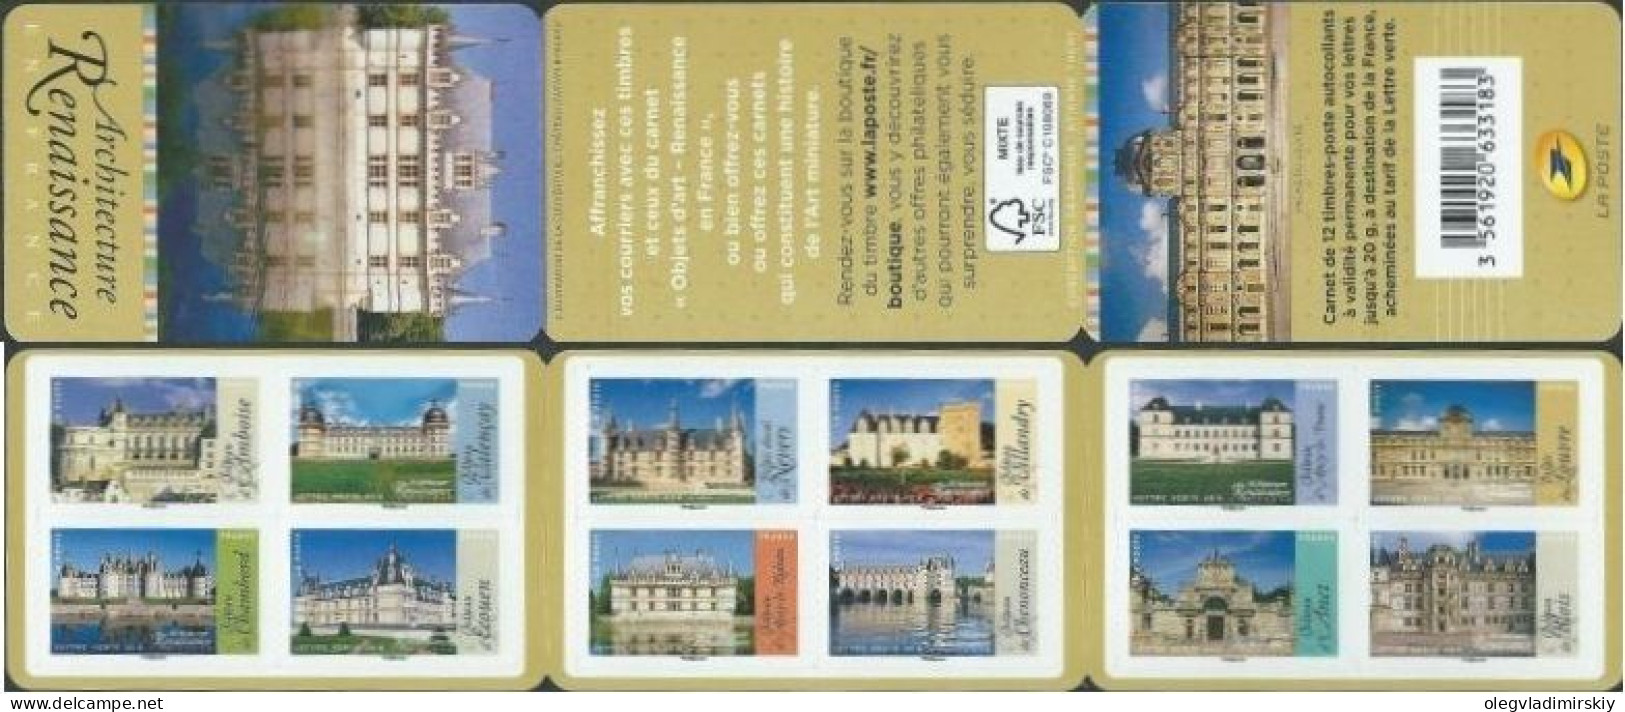 France 2015 Architecture Of Renaissance Castles Palaces Museums Set Of 12 Stamps In Booklet MNH - Schlösser U. Burgen